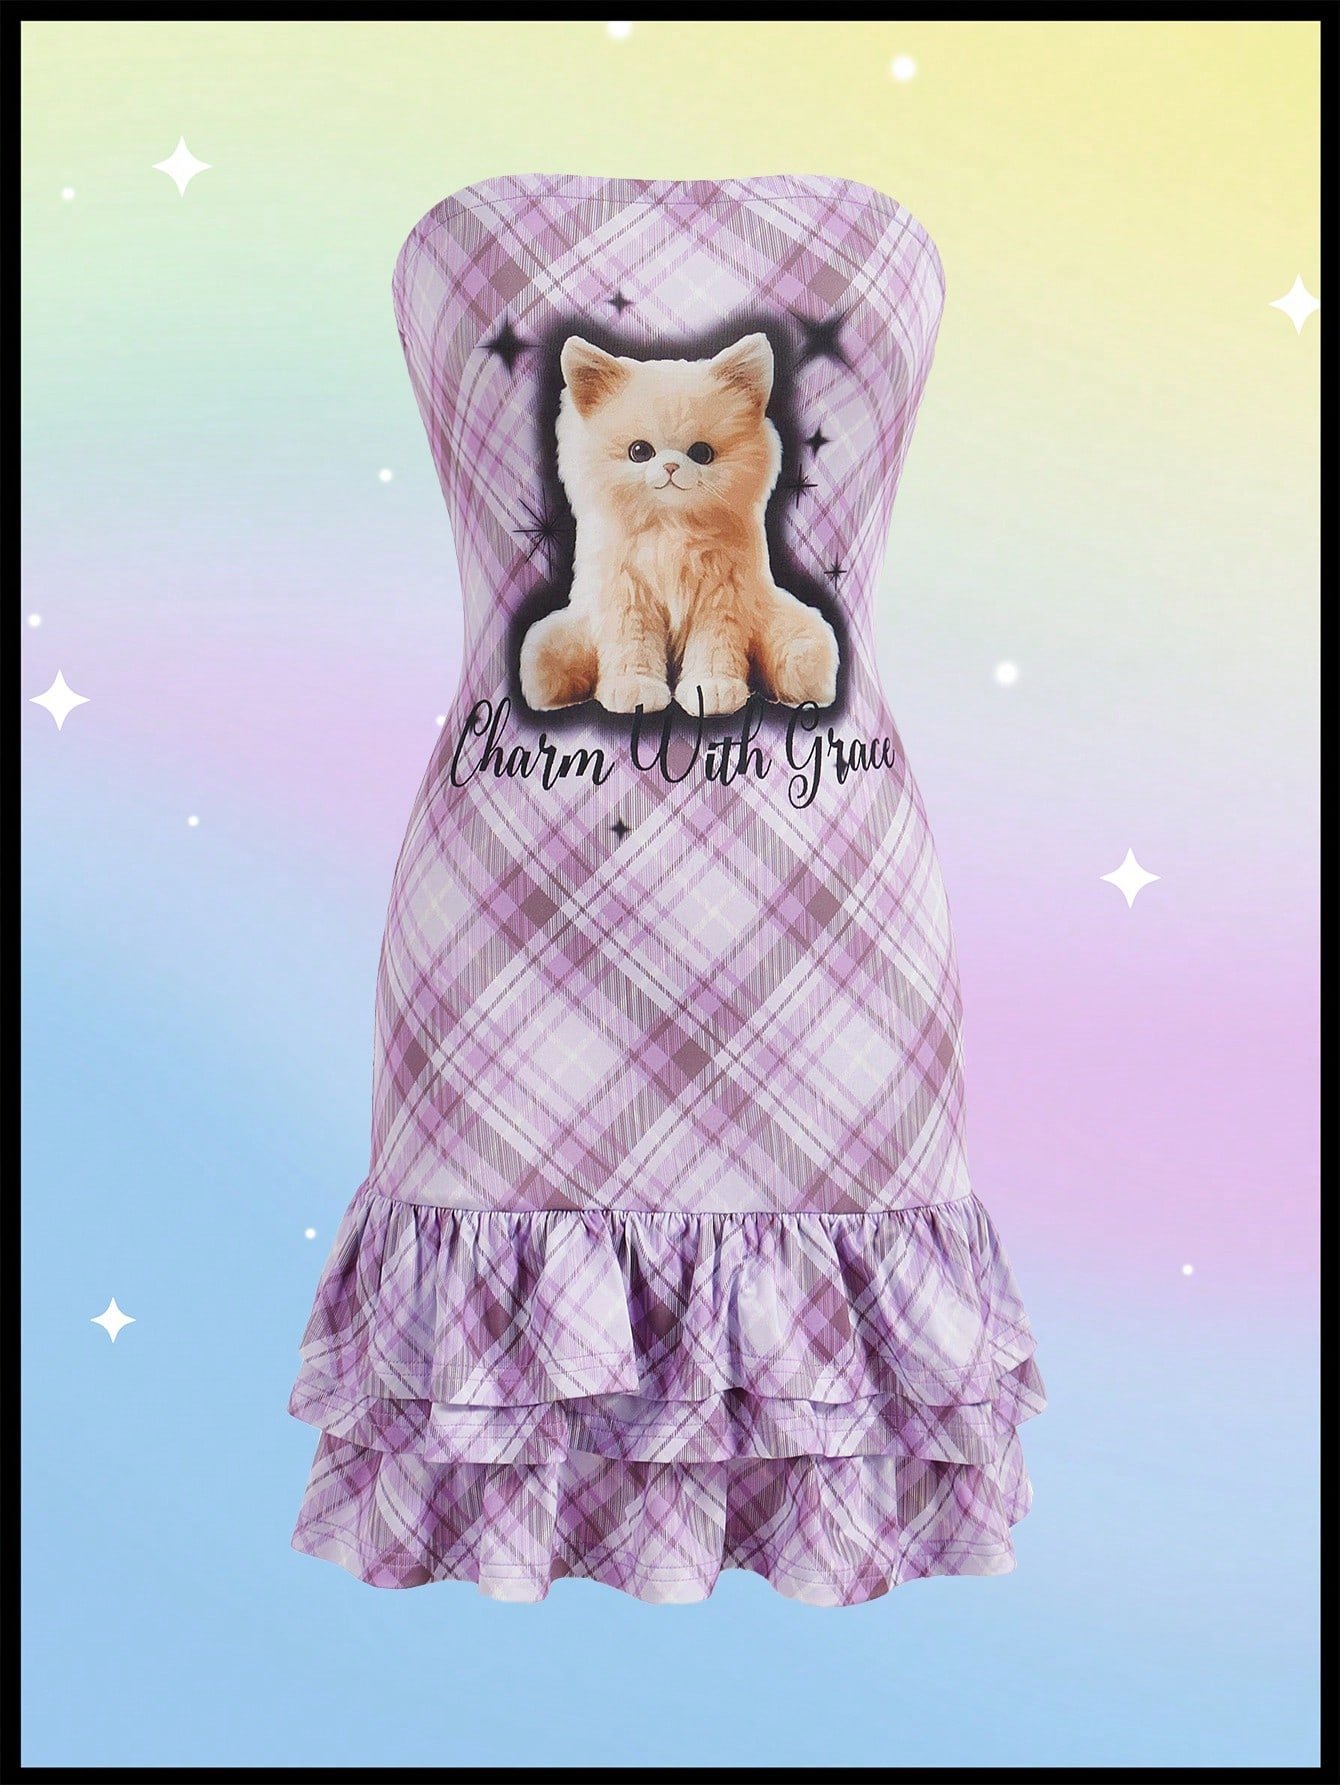 SHEIN Neu キュートな子供っぽいデザインのチューブトップ ドーパミンキャット タイトなウーマンズドレス